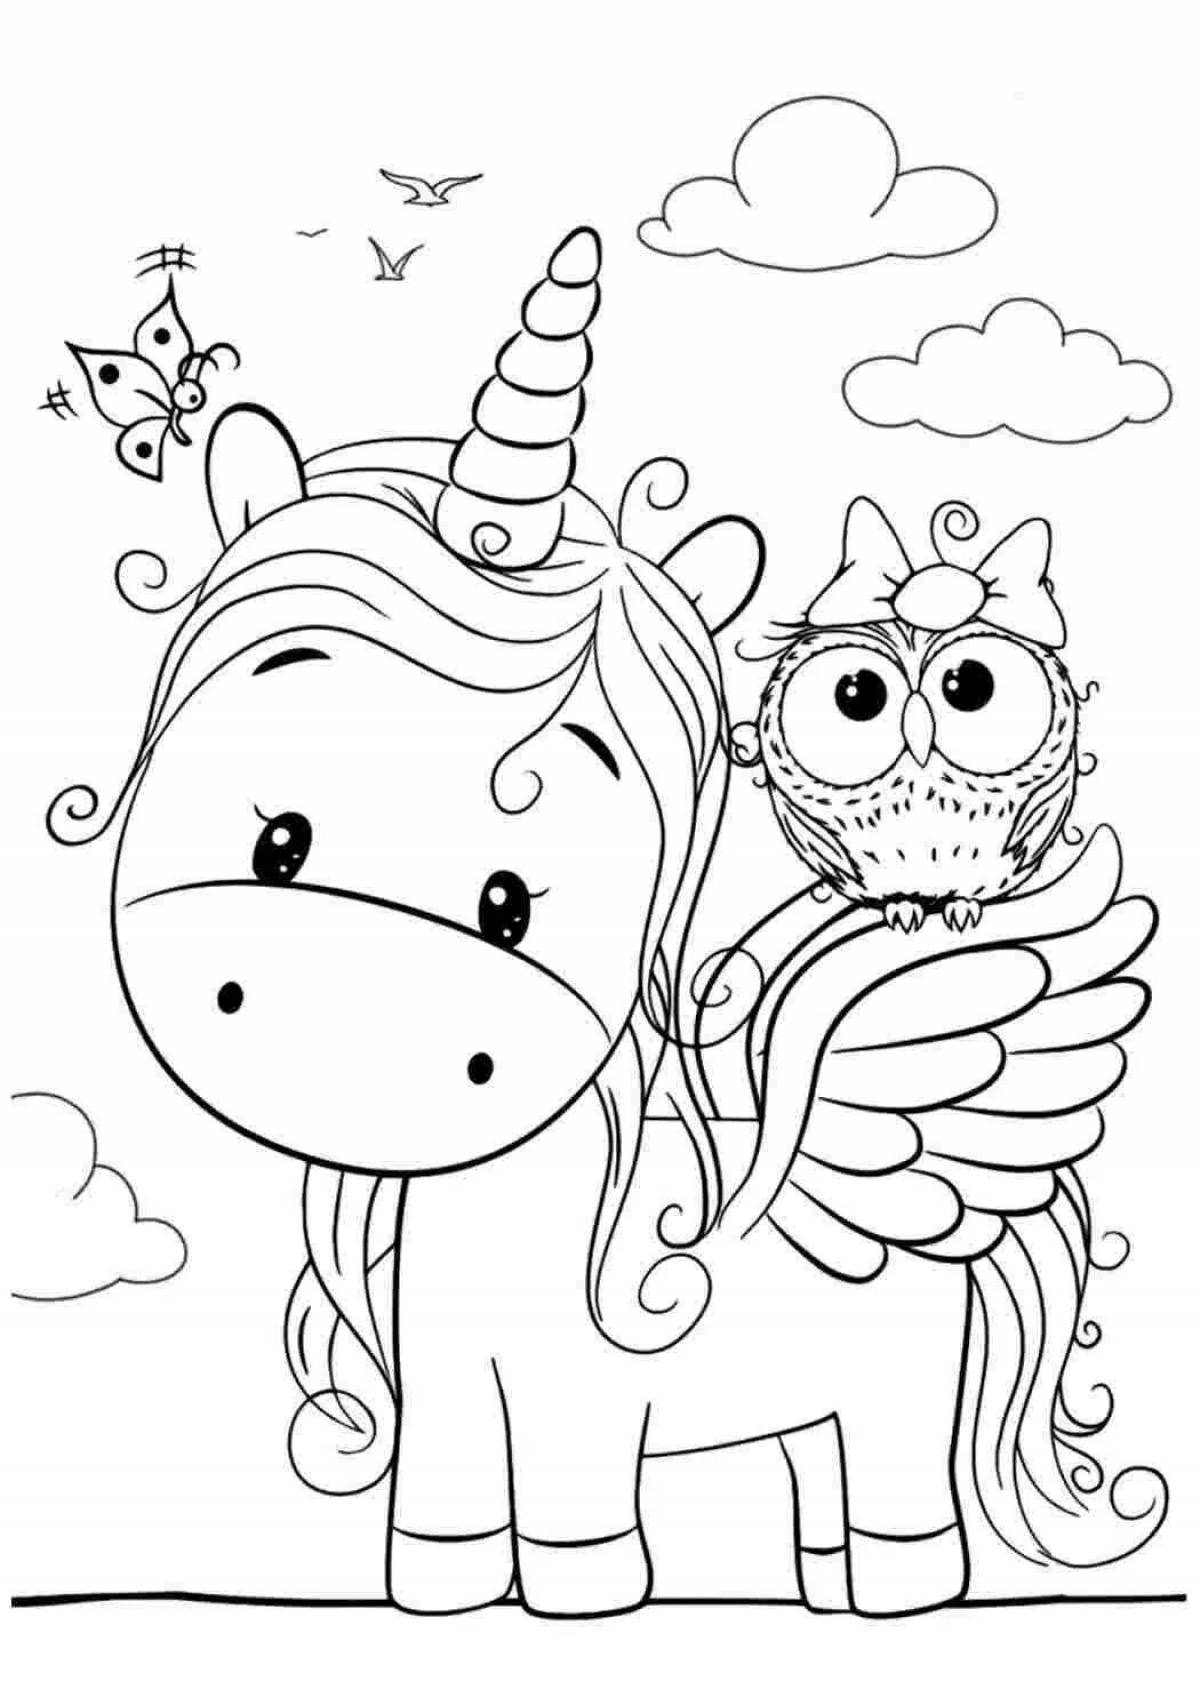 Joyful coloring for girls 7 years old unicorn